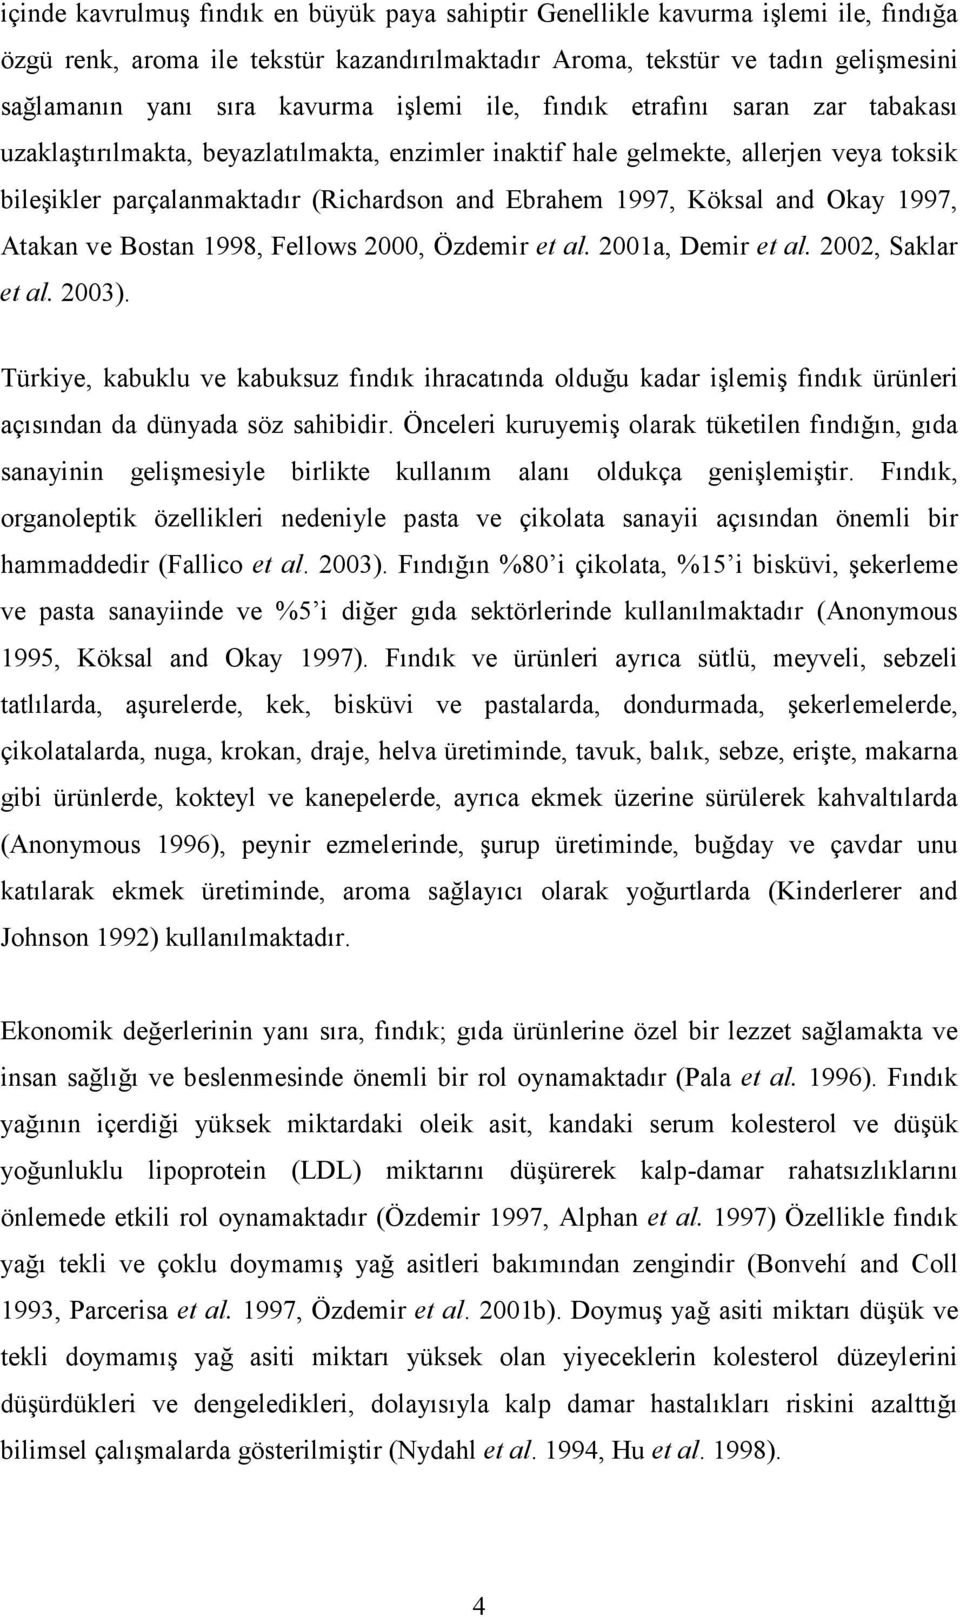 Köksal and Okay 1997, Atakan ve Bostan 1998, Fellows 2000, Özdemir et al. 2001a, Demir et al. 2002, Saklar et al. 2003).